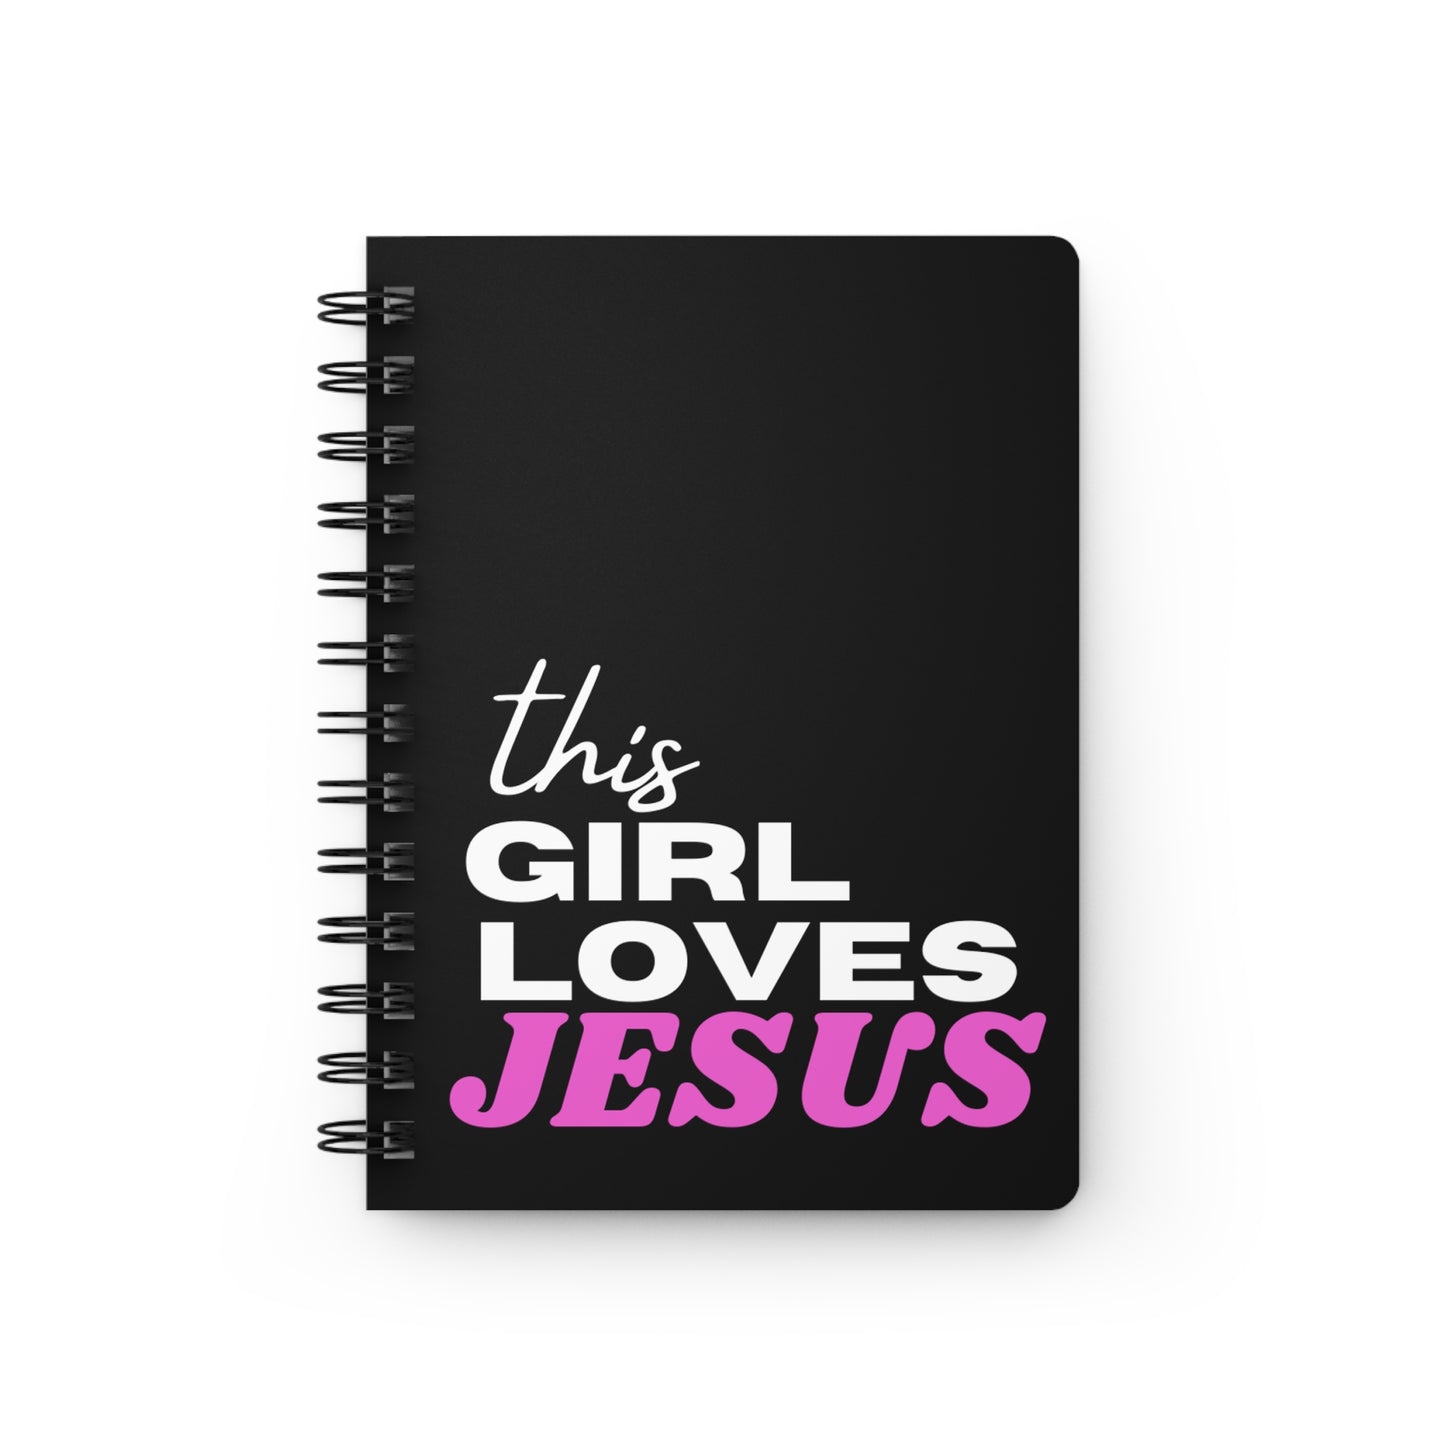 This Girl Loves Jesus Spiral Bound Journal